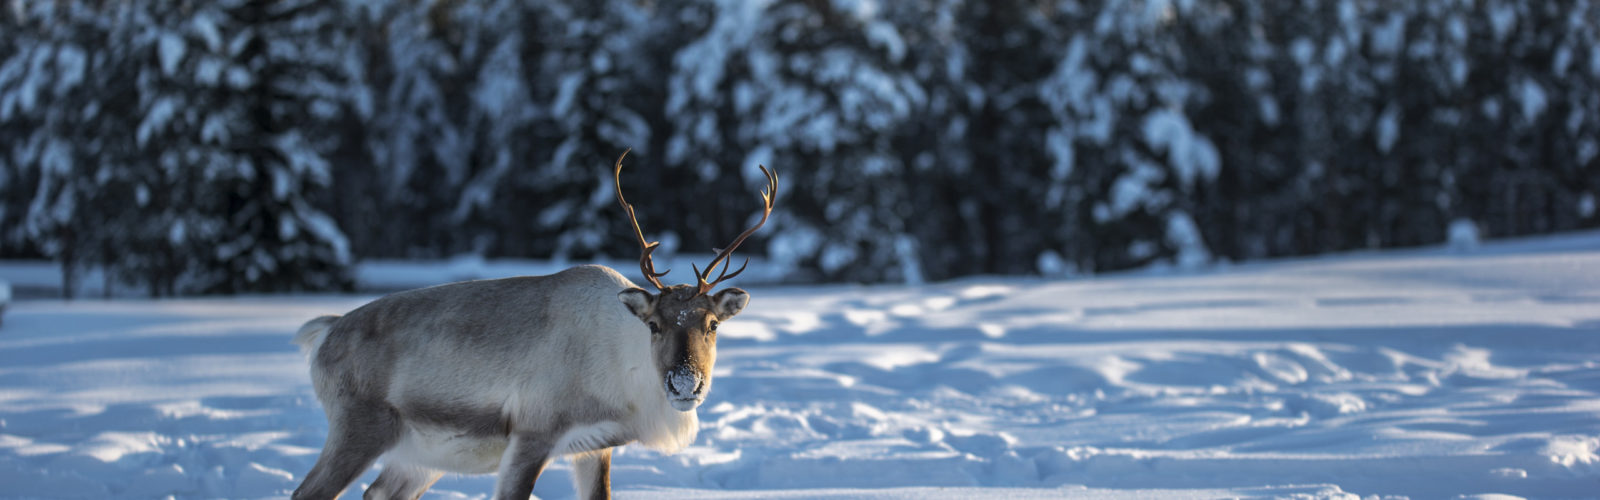 reindeer-swedish-lapland